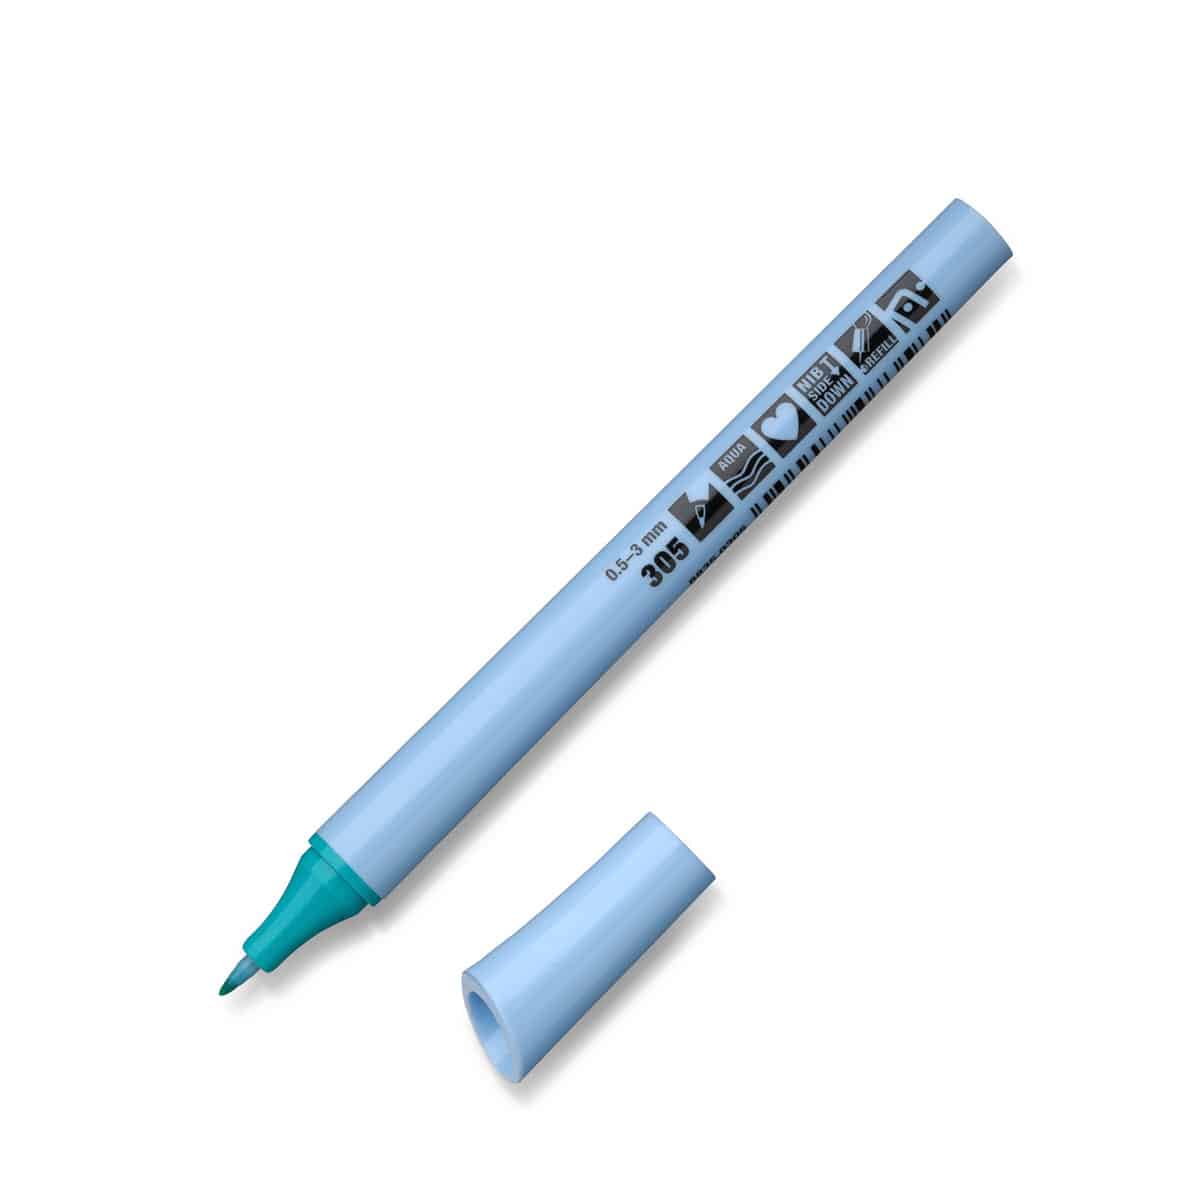 Neuland FineOne® Flex, flexible Faserspitze 0,5-3 mm, Einzelfarben- 305 ocean